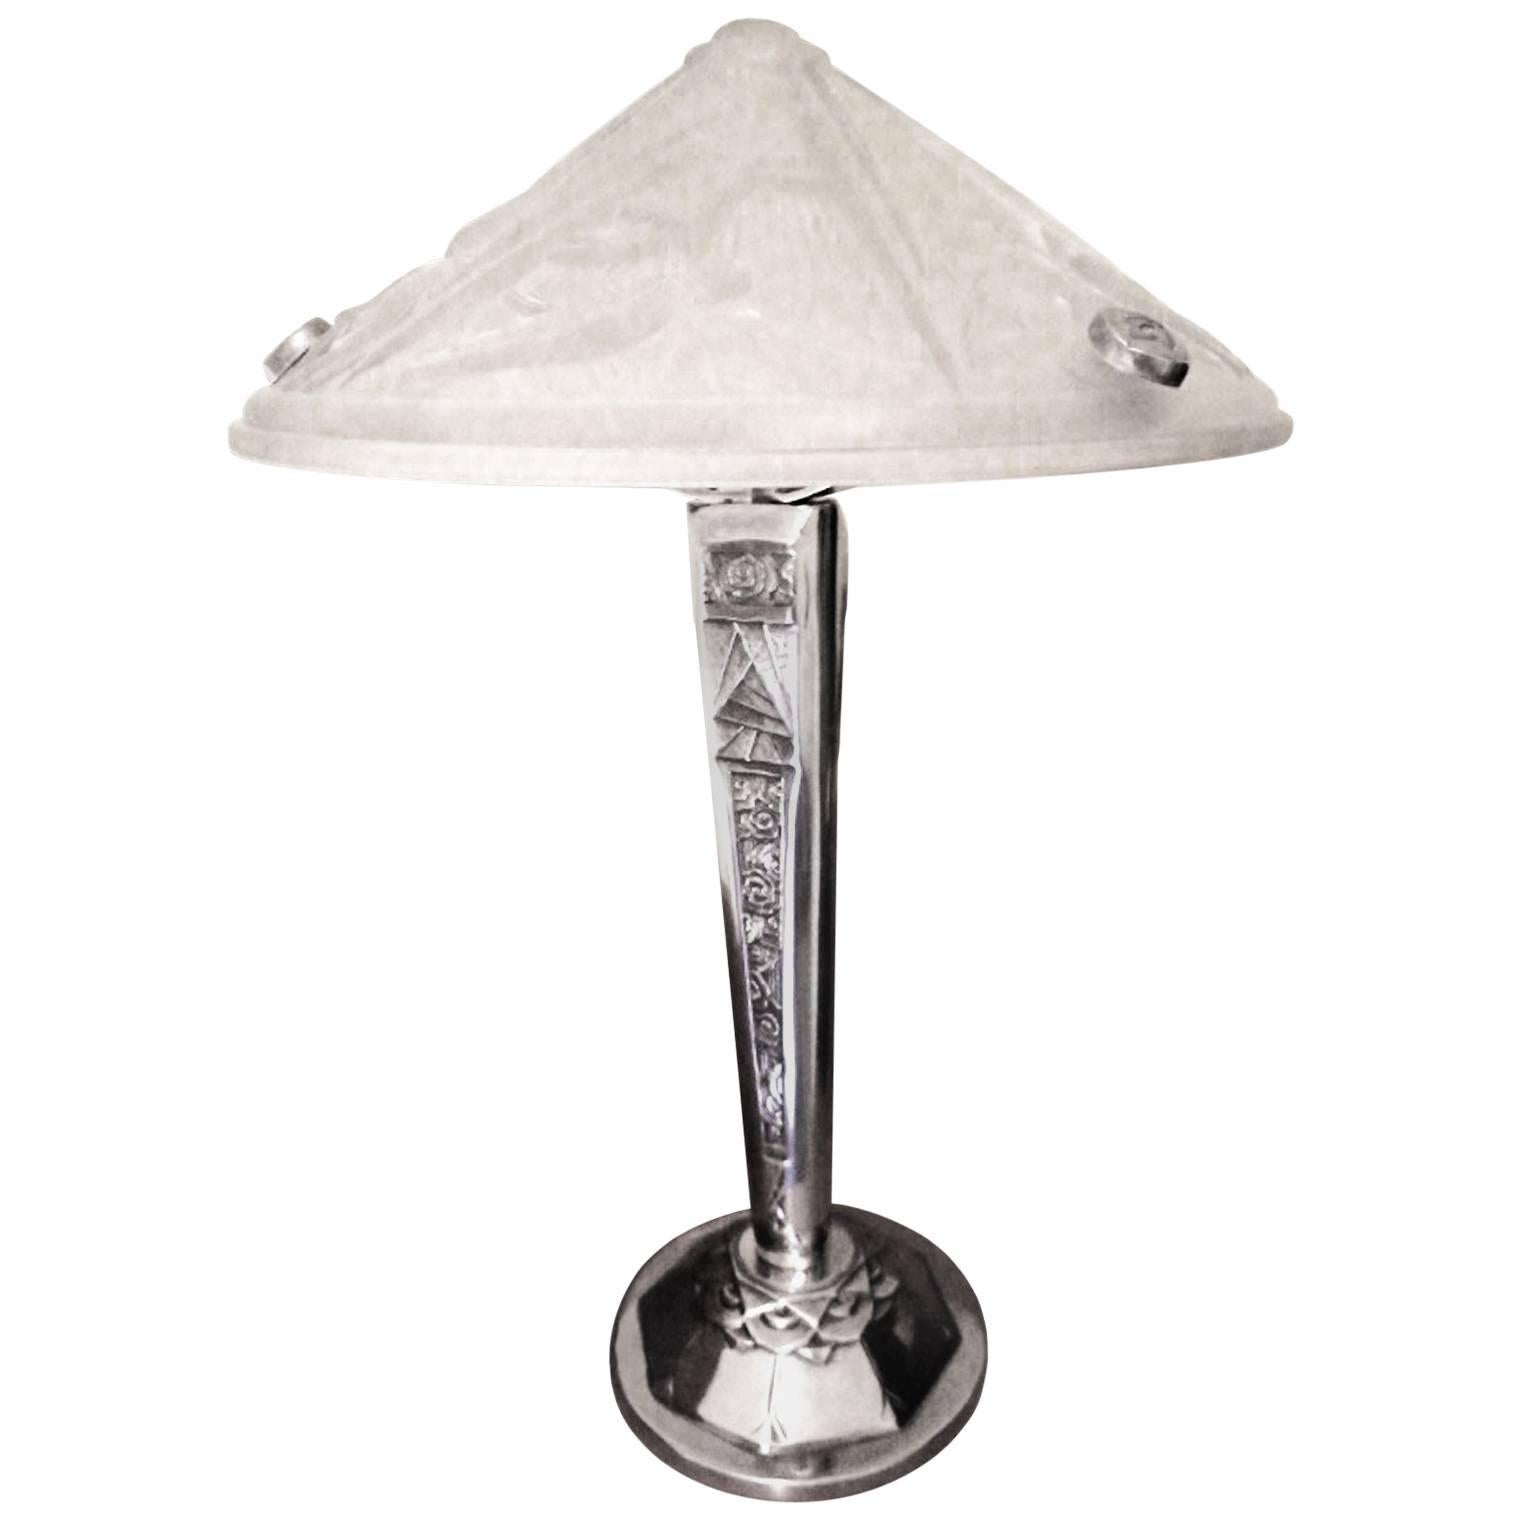 French Art Deco Table Lamp Signed Hanots, circa 1925